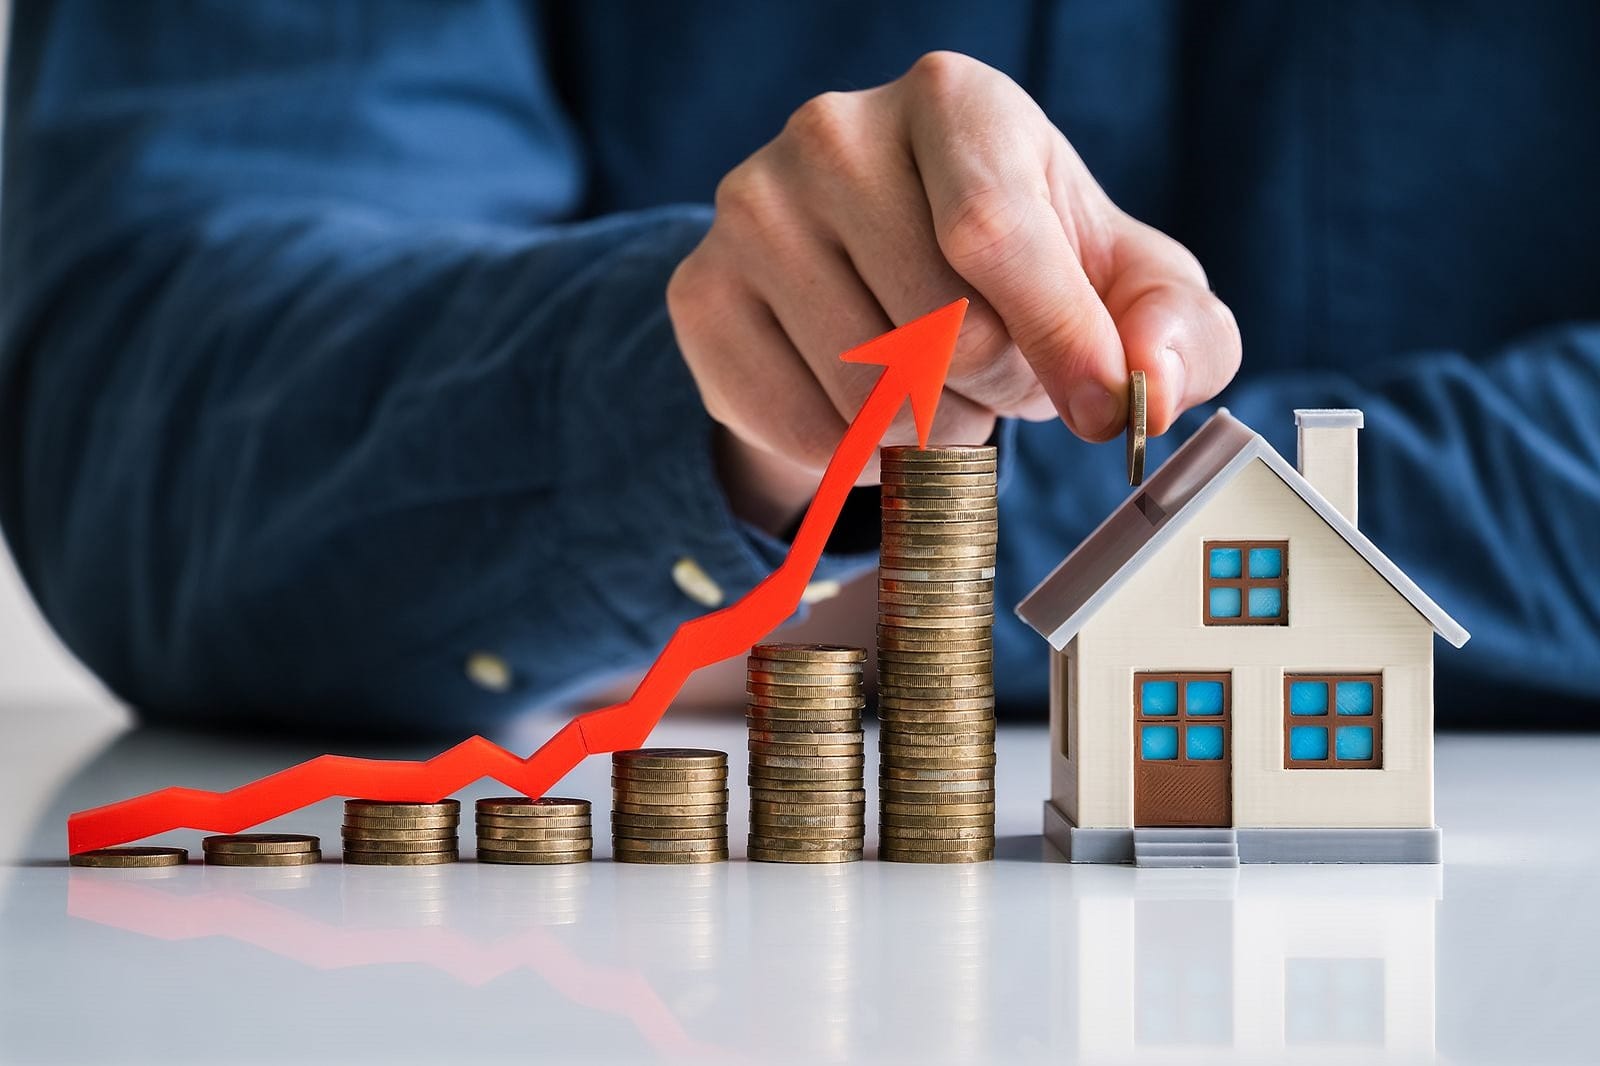 investing in rental properties nj